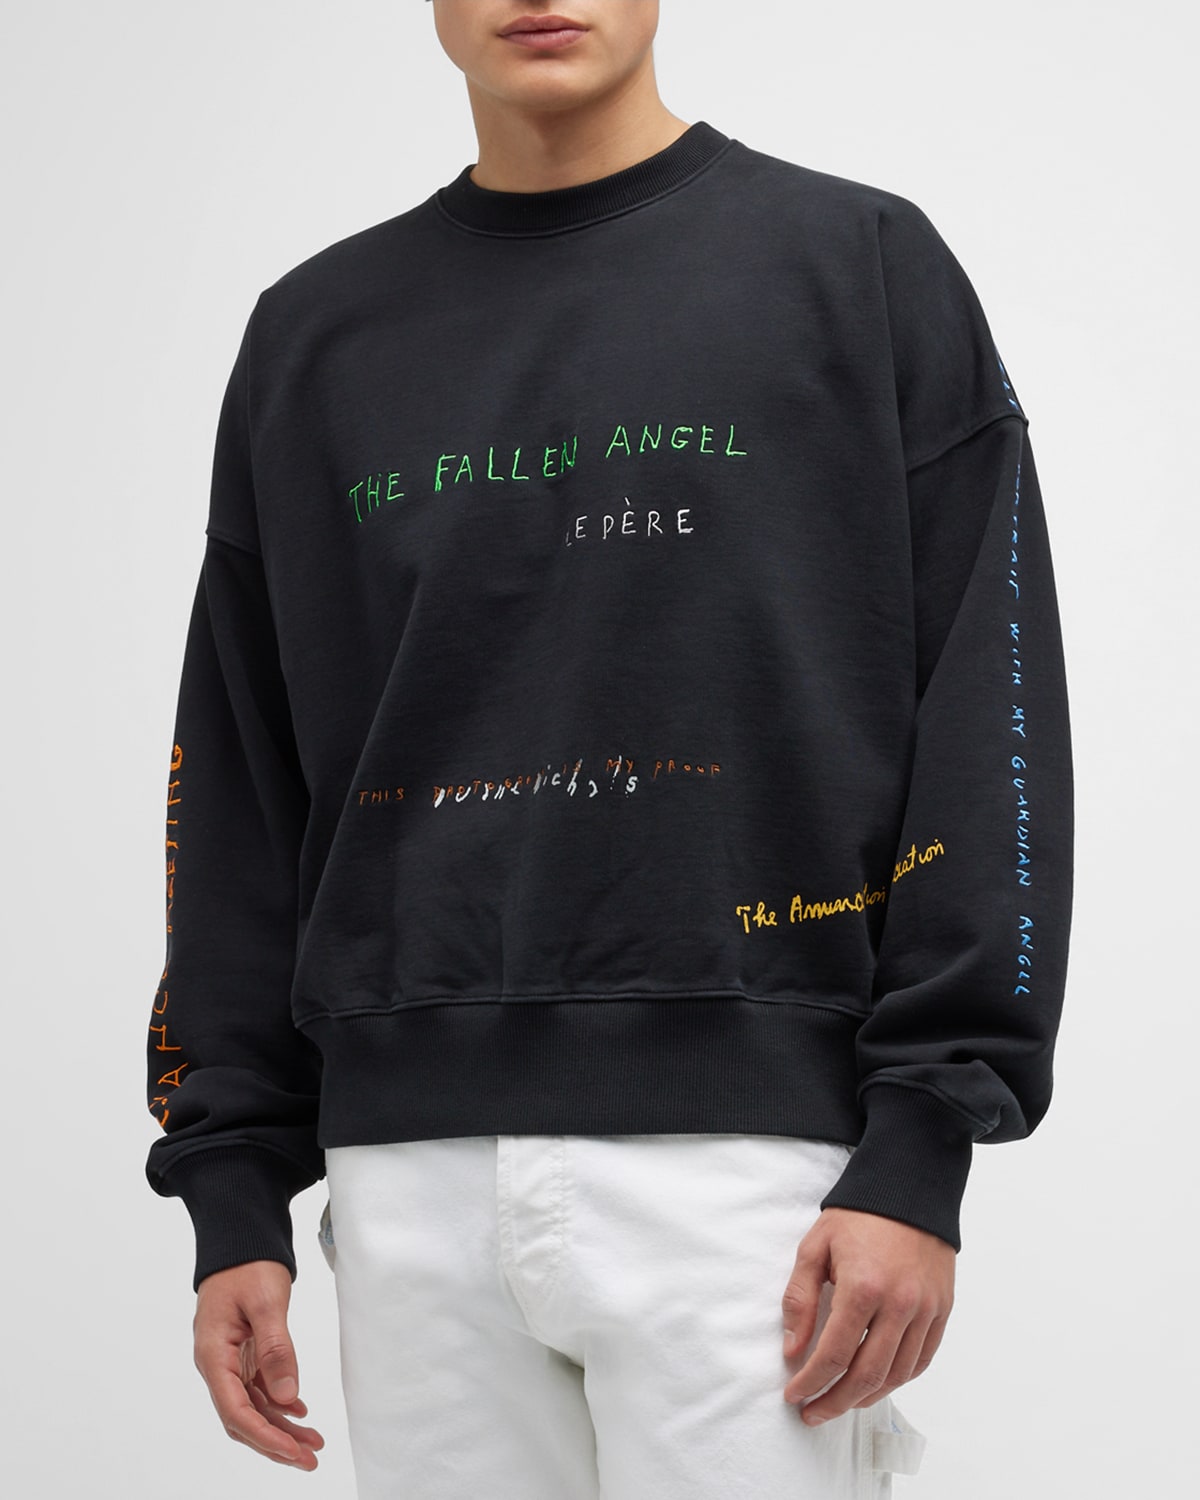 Le Pere X Duane Michals Men's Michals Fallen Angel Crewneck Sweatshirt In Carbon Black